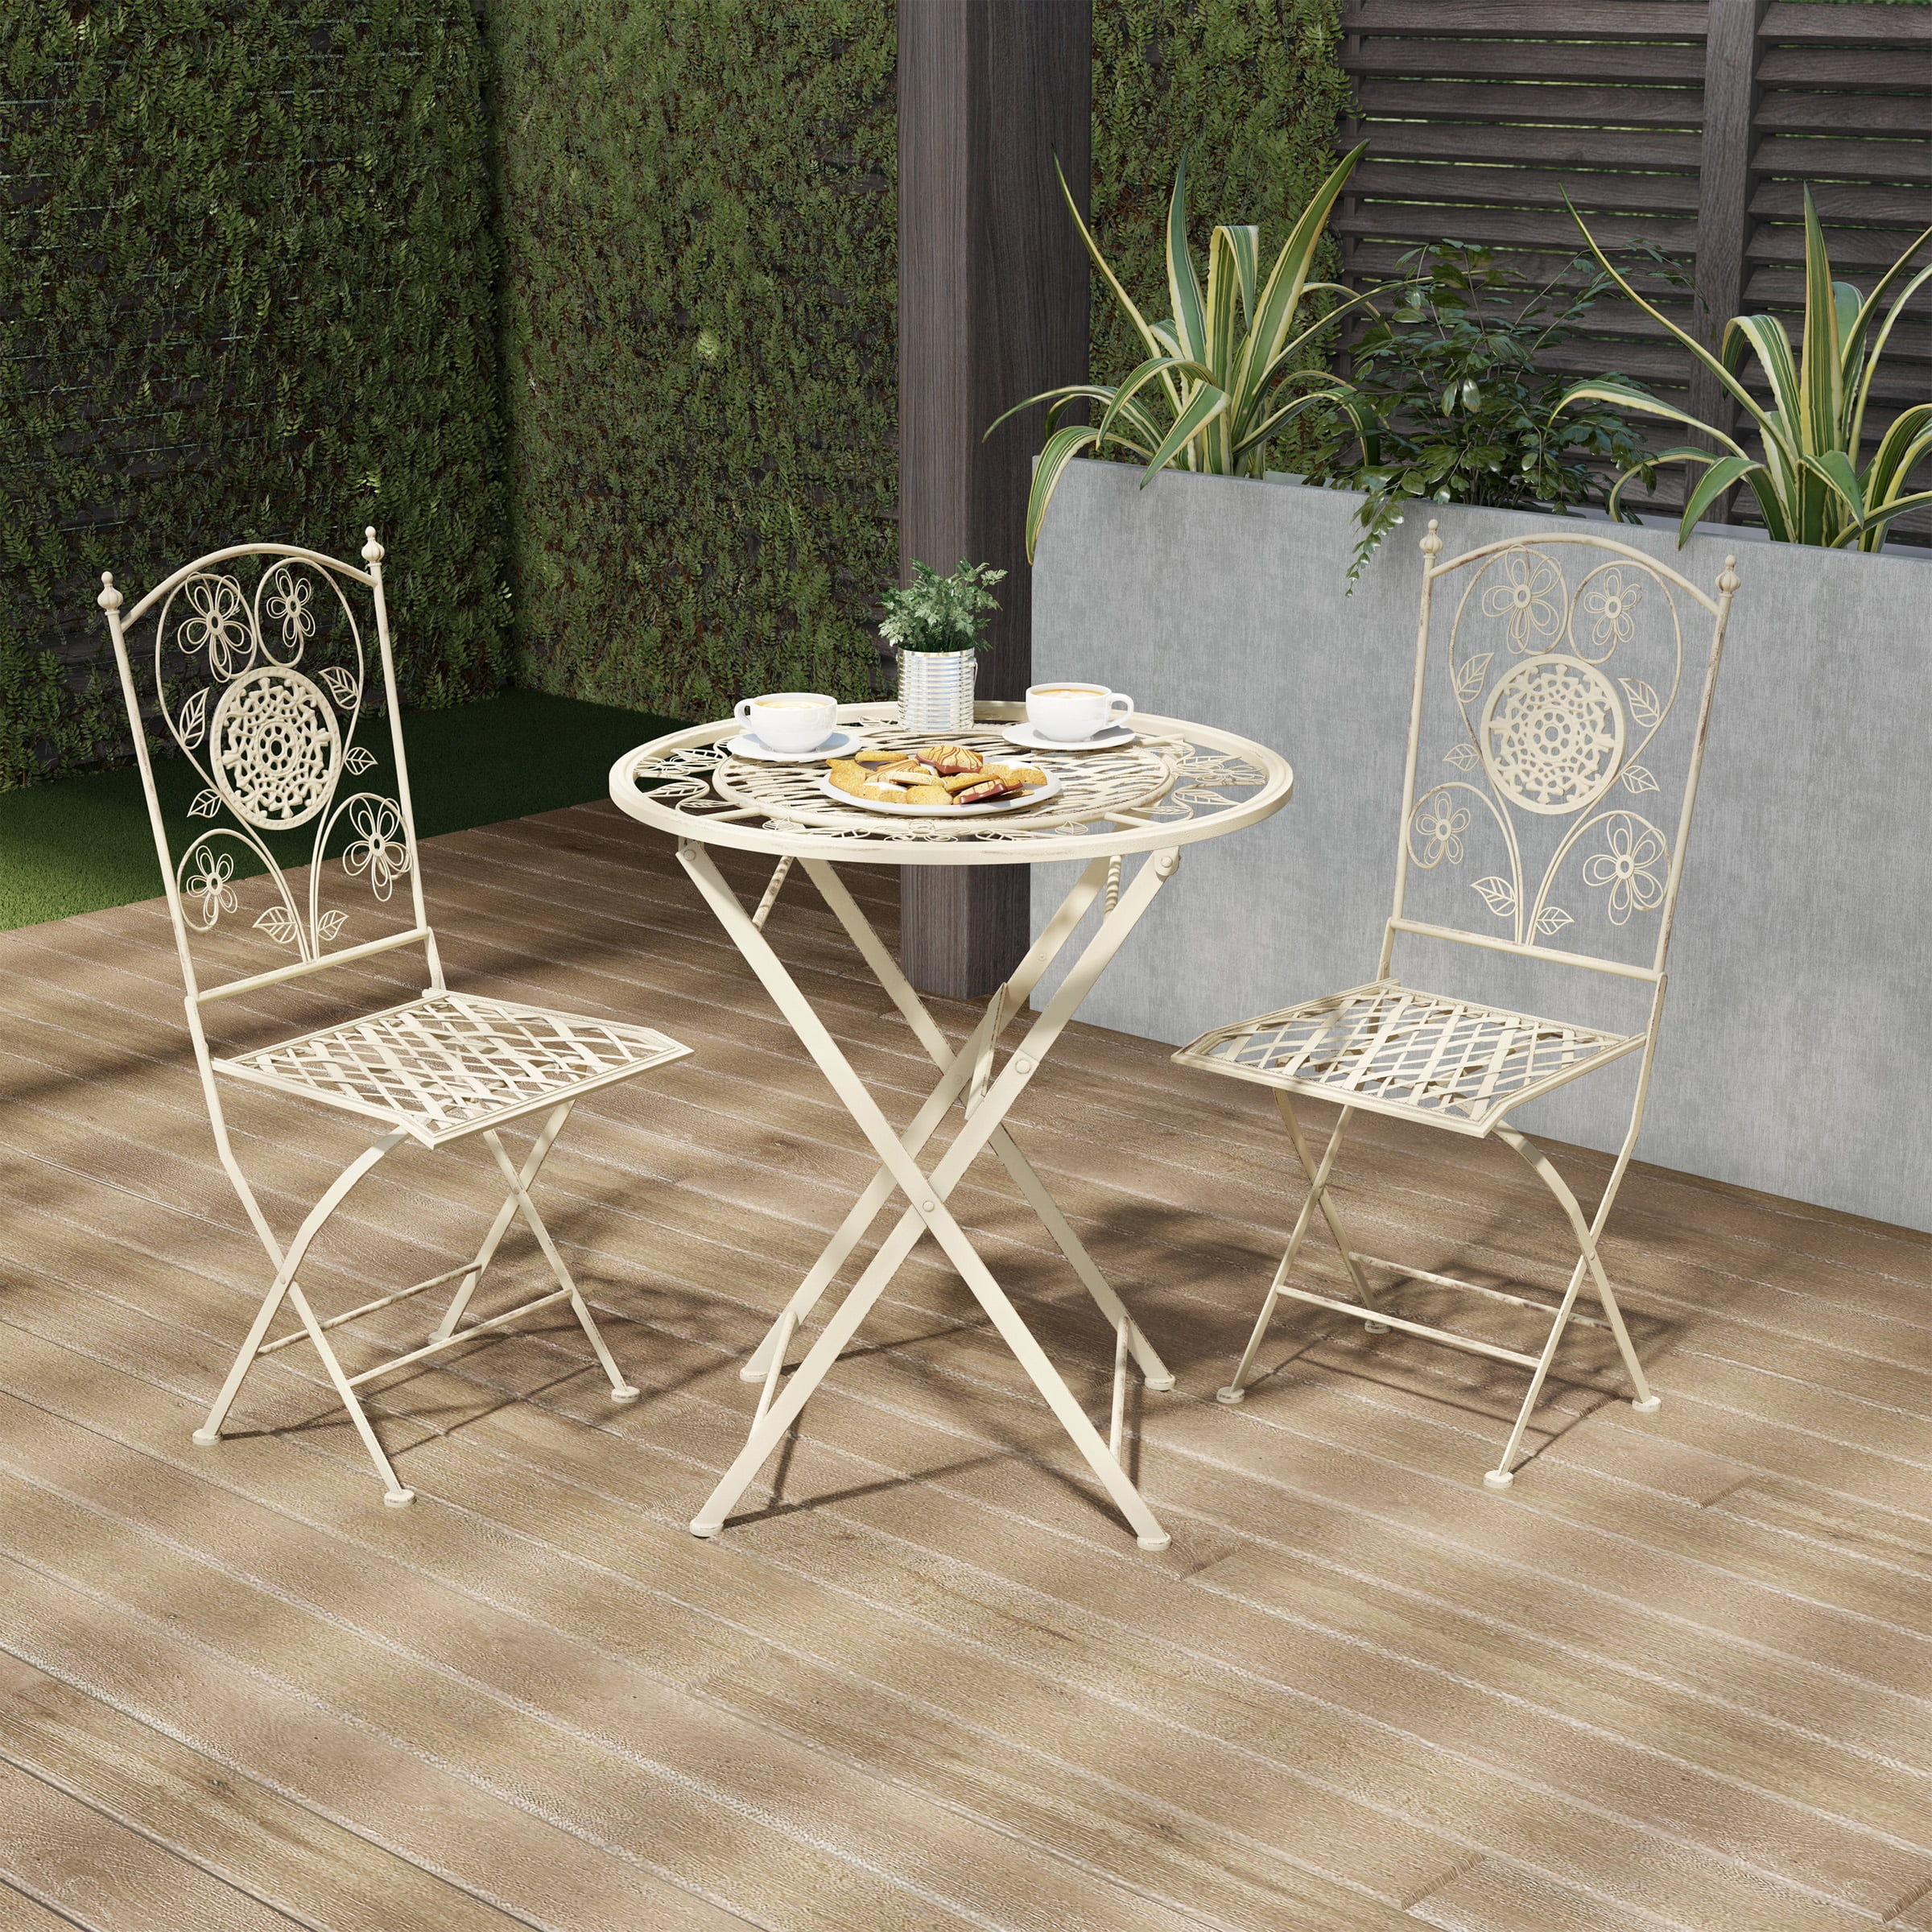 Mosaic Bistro Set Table Folding Chair Home Garden Outdoor Patio Furniture 